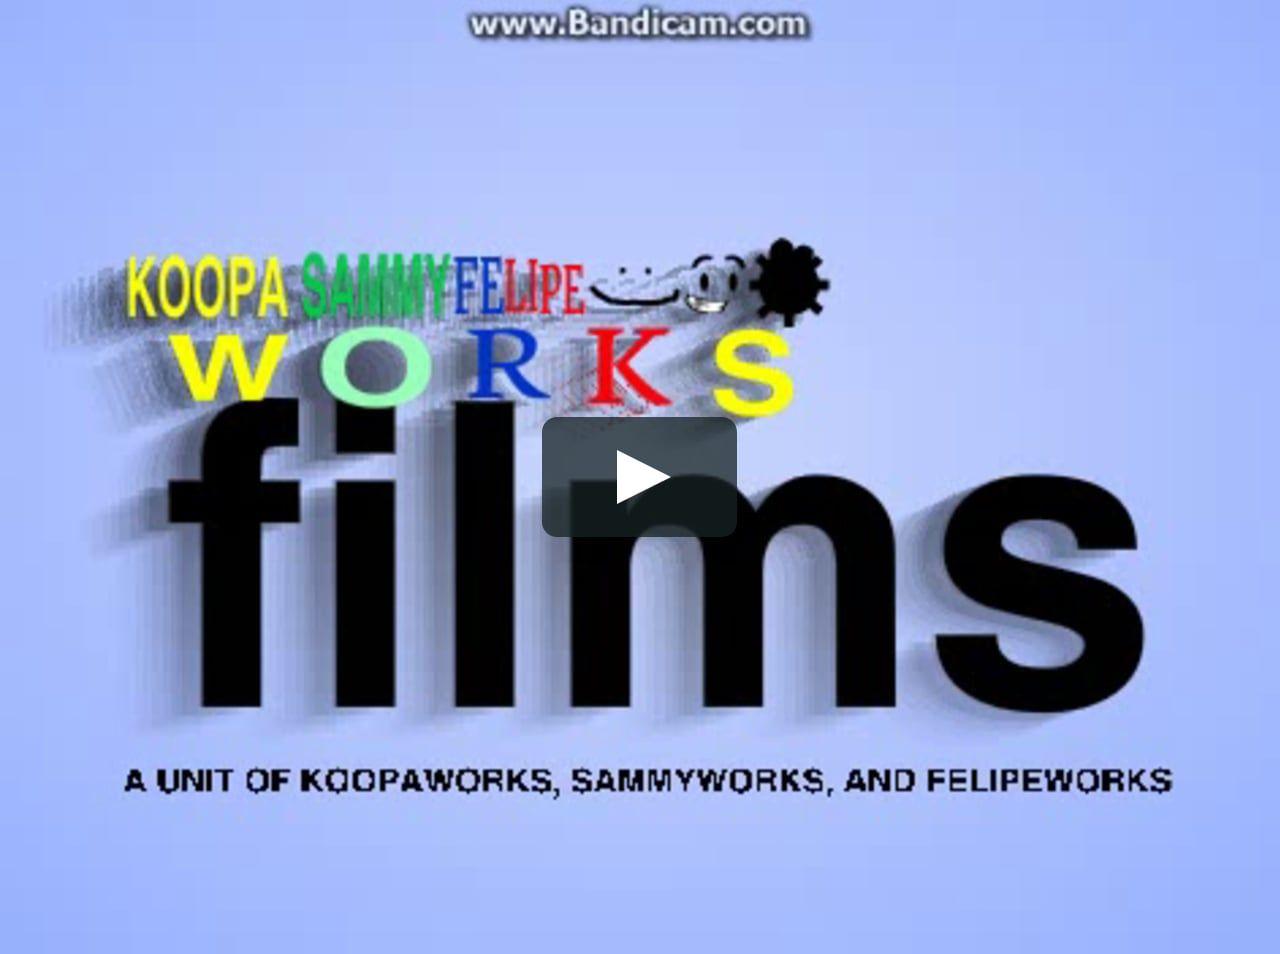 Koopa Logo - Koopa/Sammy/FelipeWorks Films logo on Vimeo